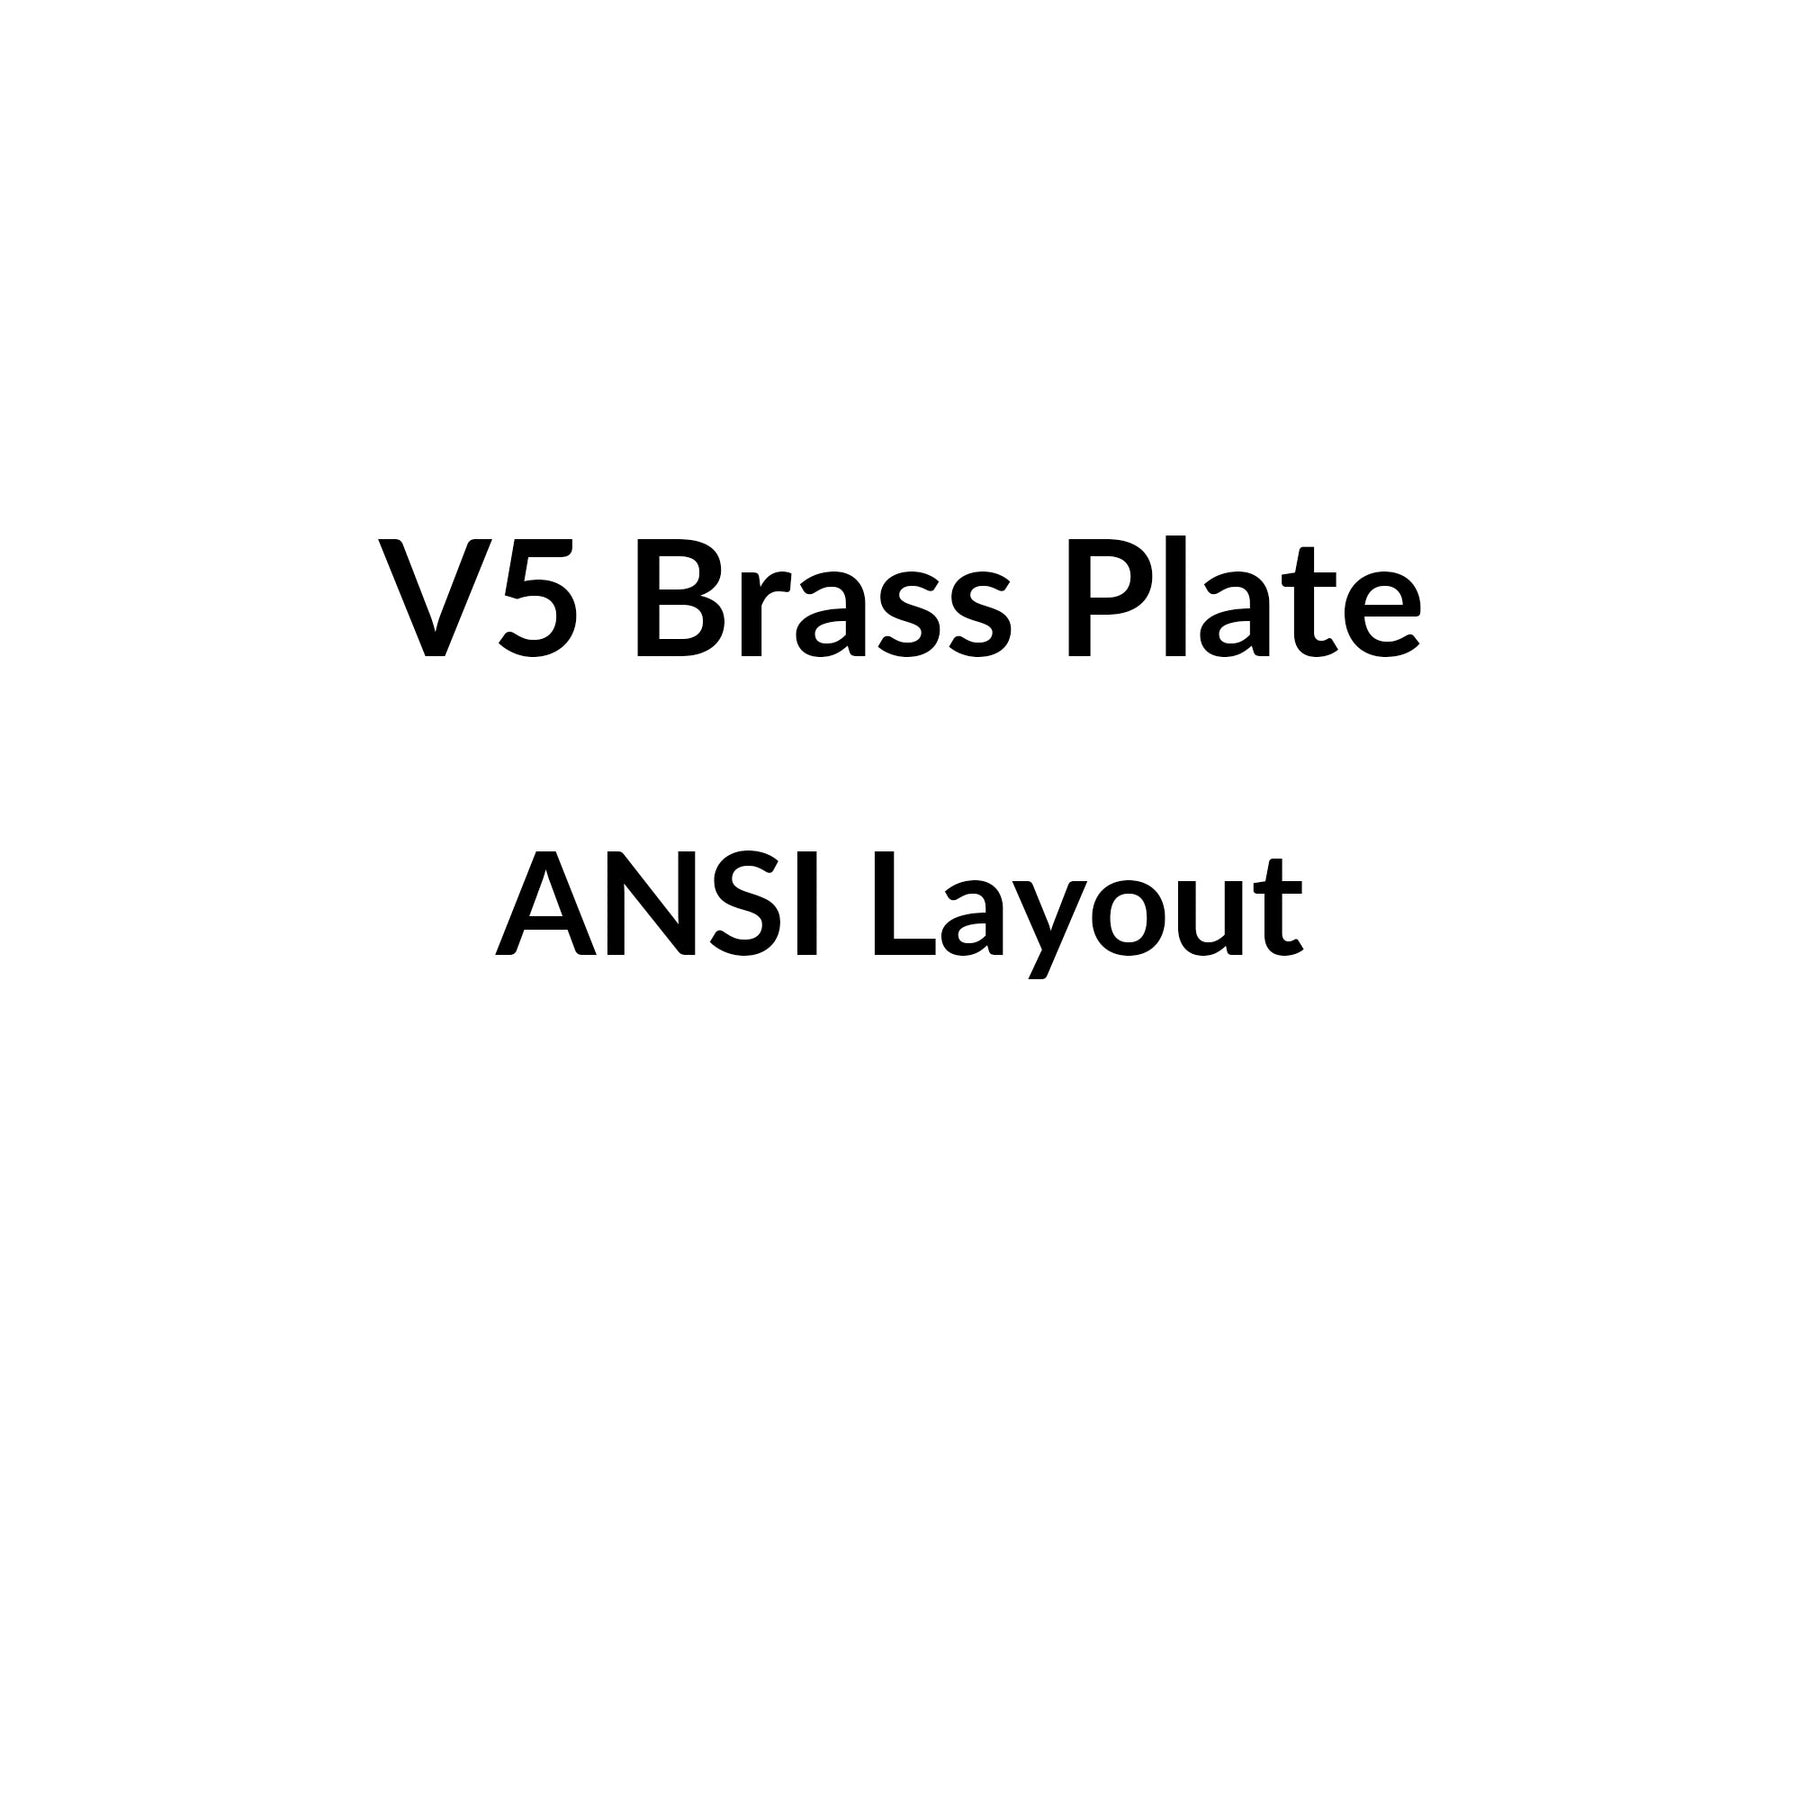 V5 Brass Plate